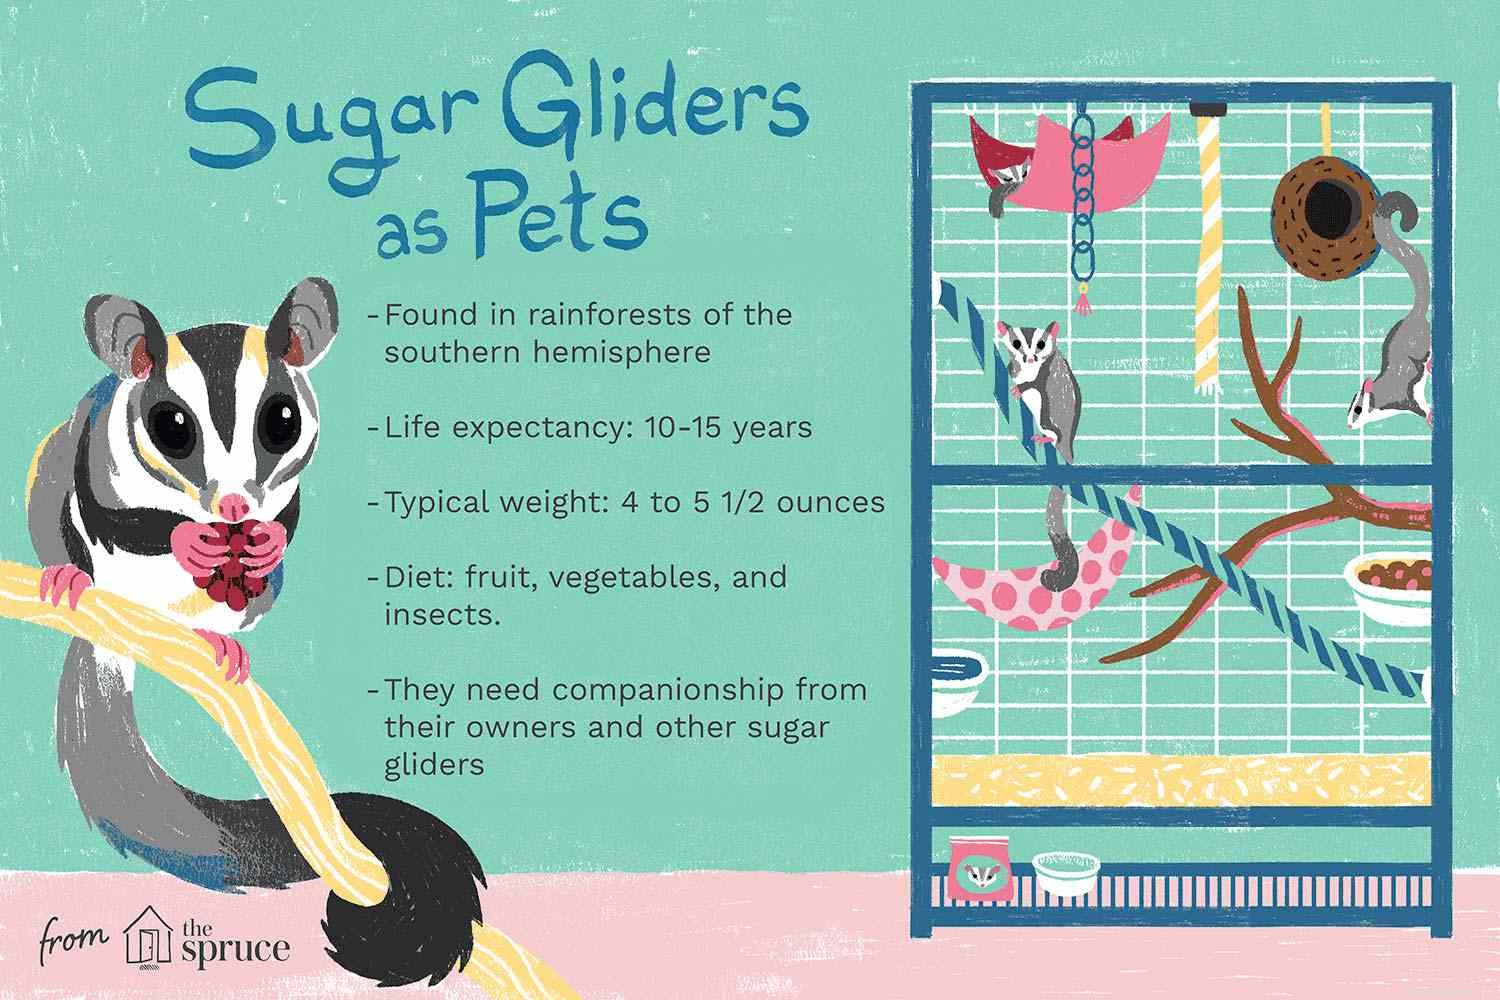 Fakta om Sugar Gliders